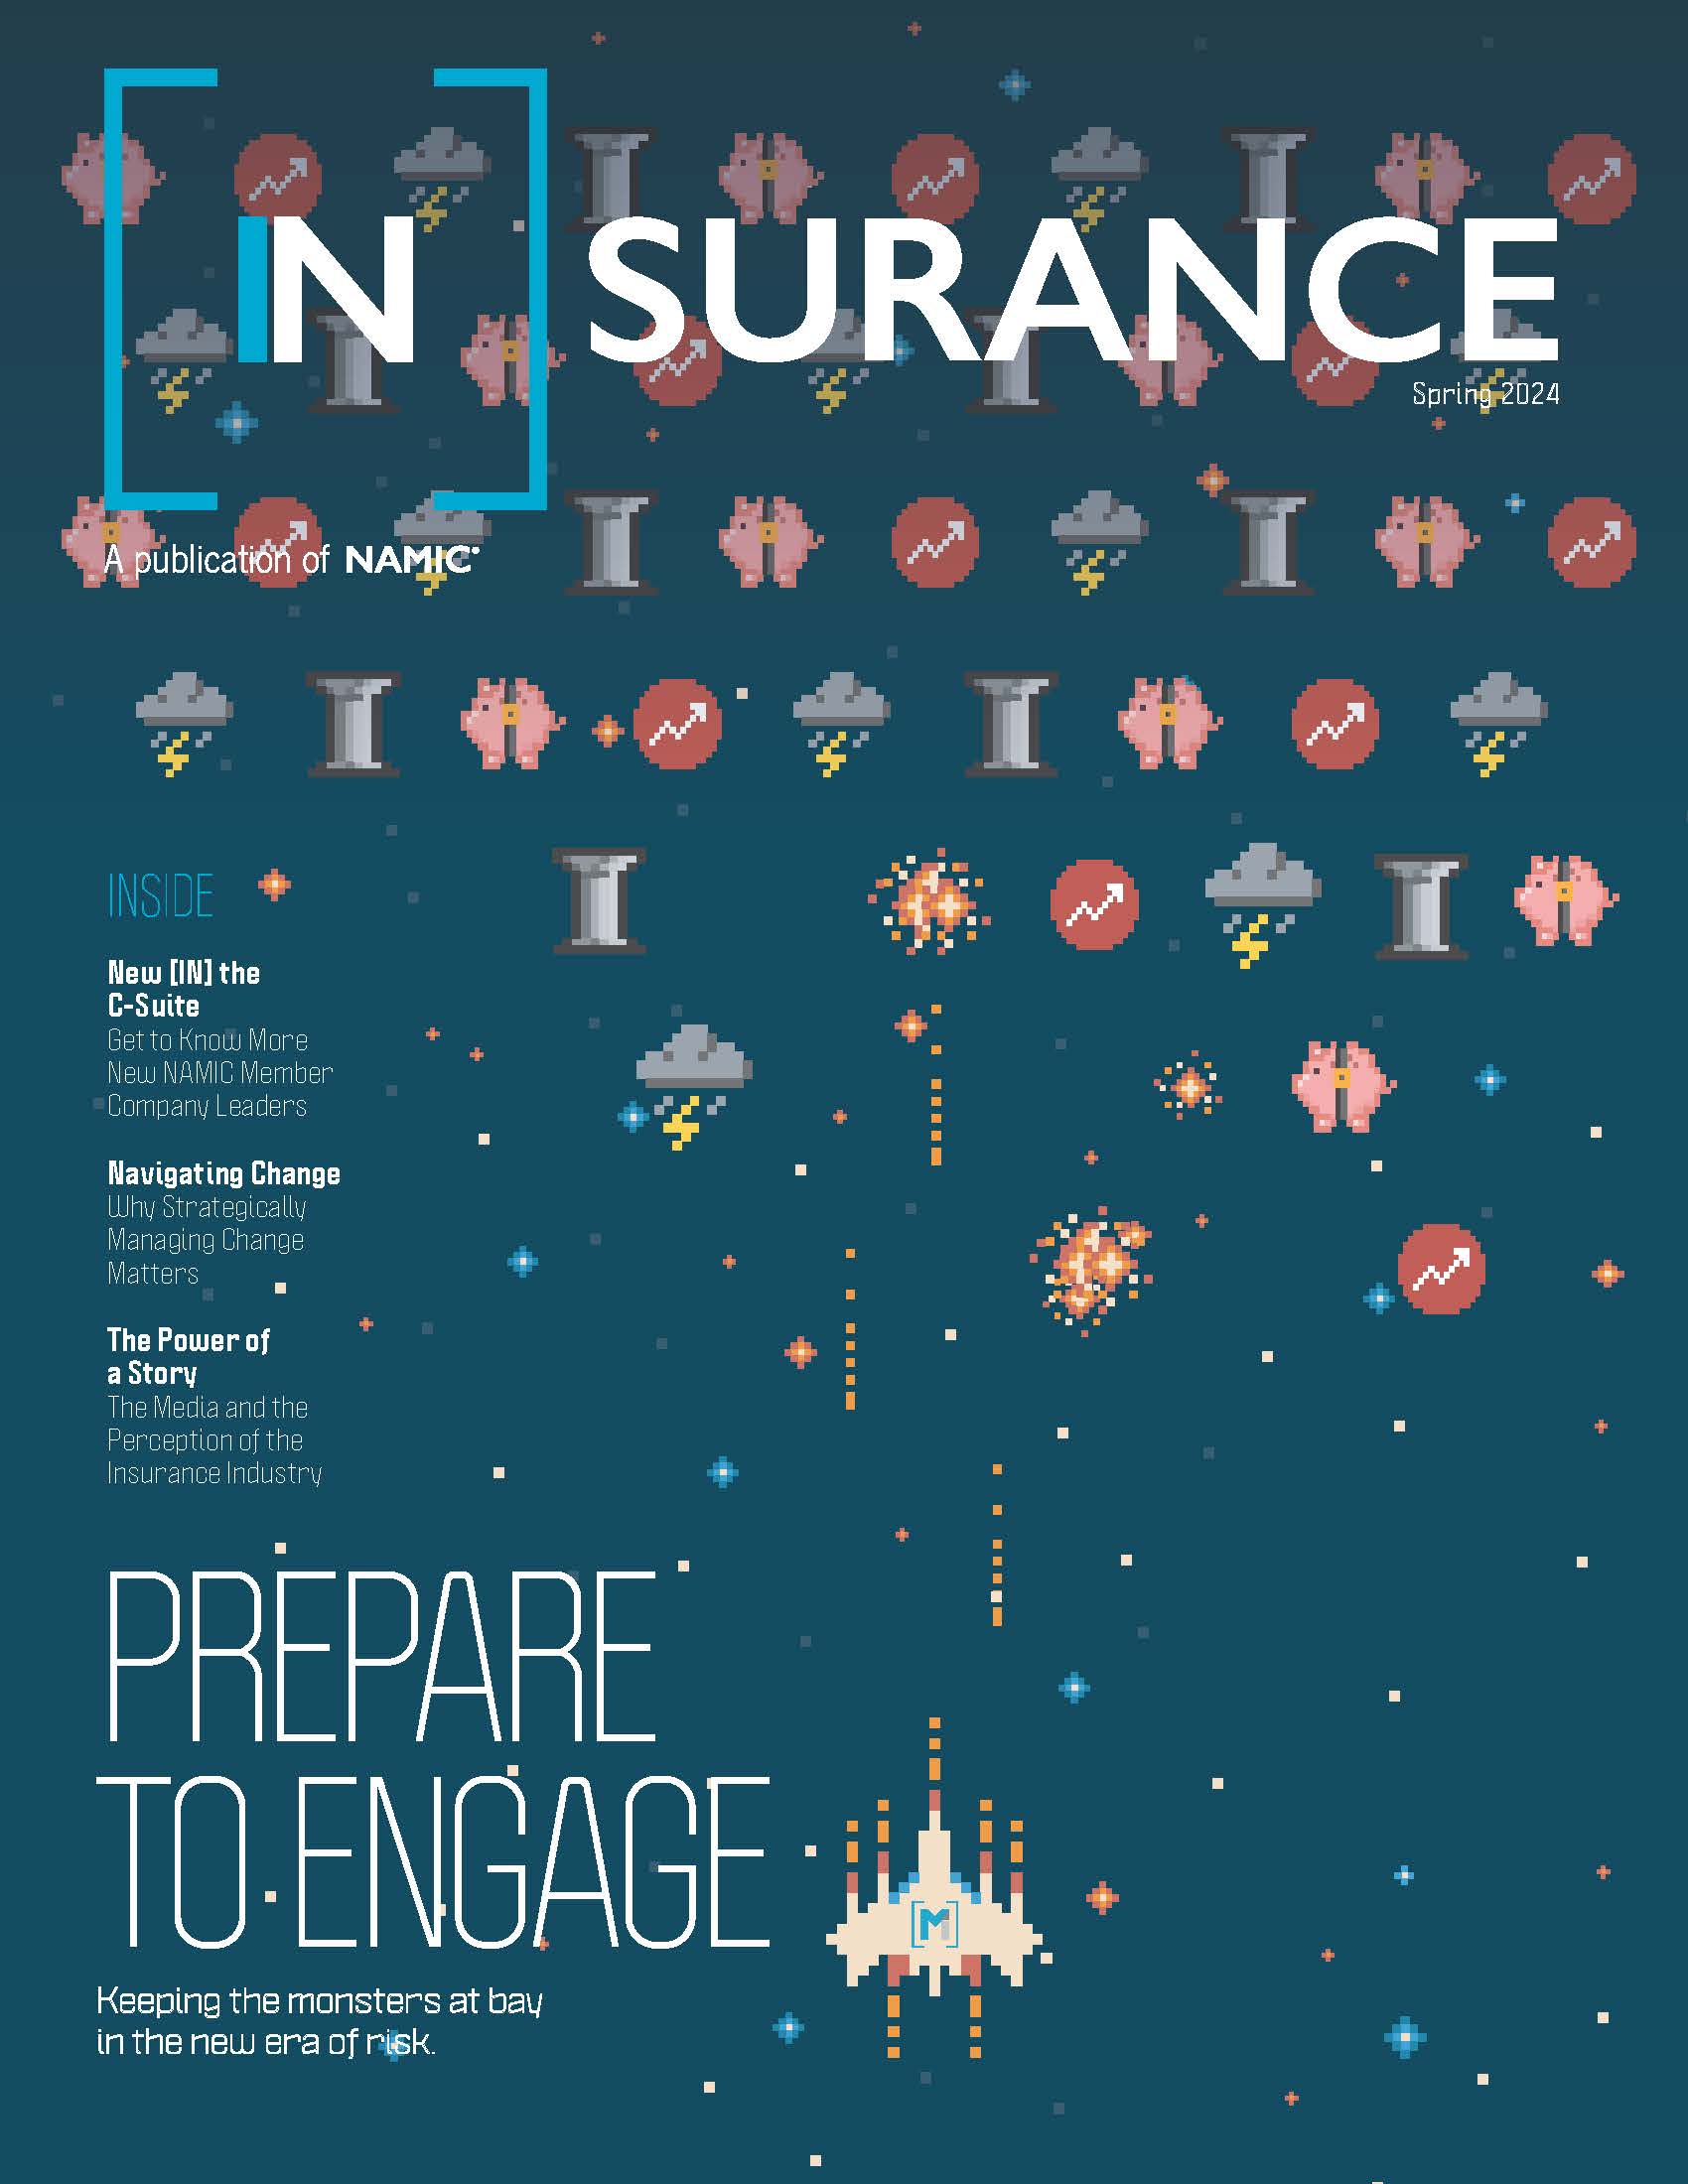 Mutual INsurance | A publication of NAMIC